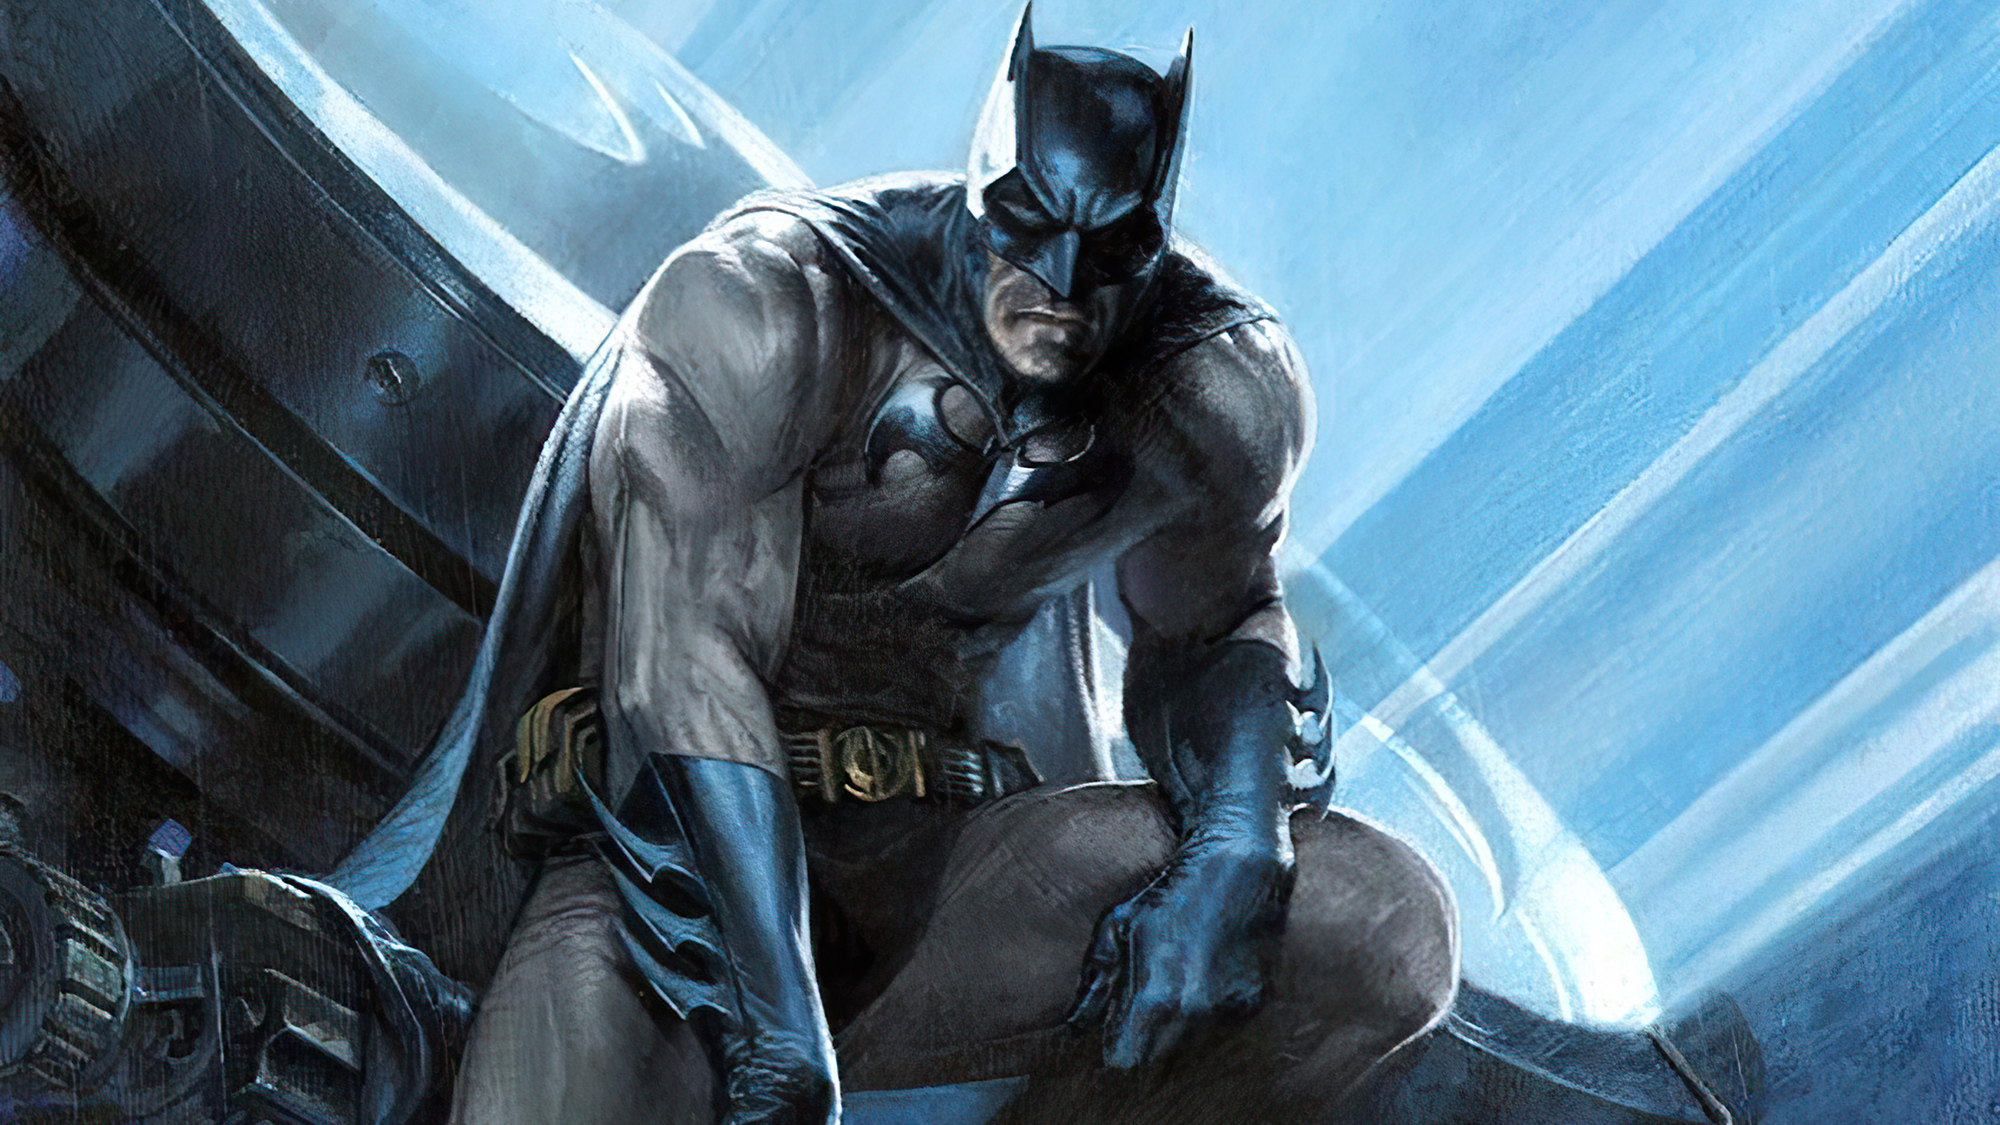 Batman Comics Artwork, HD Superheroes, 4k Wallpapers, Images